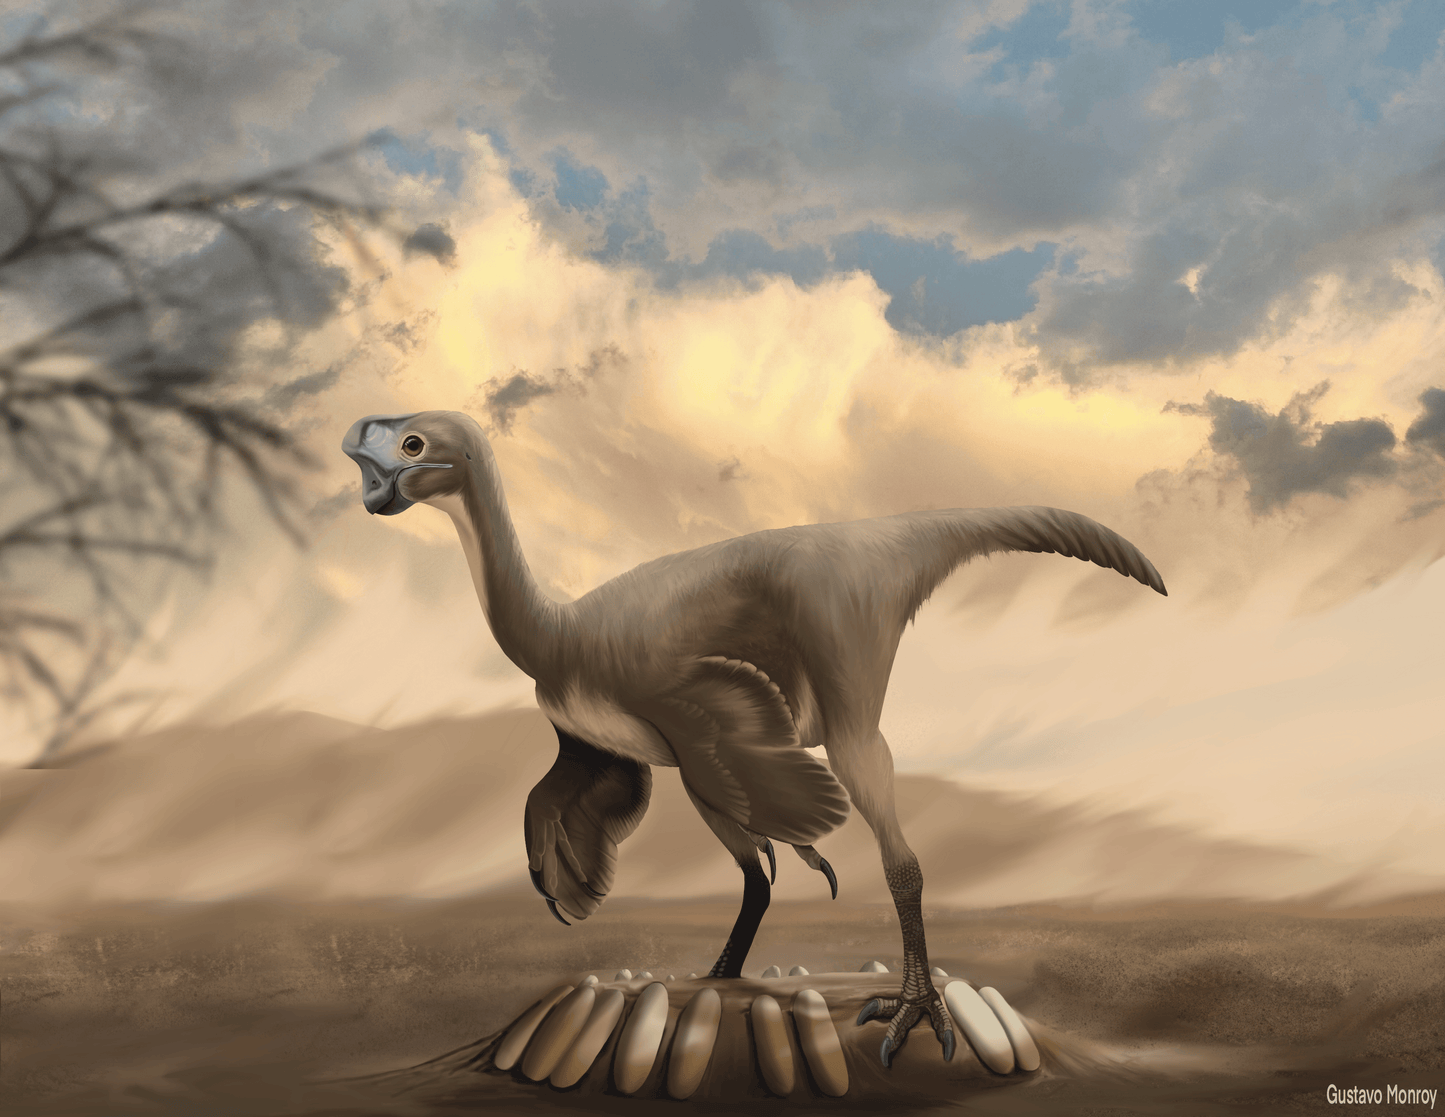 Oviraptorid egg cast and Anzu hand claw cast - Fossil Crates Dinosaur egg cast